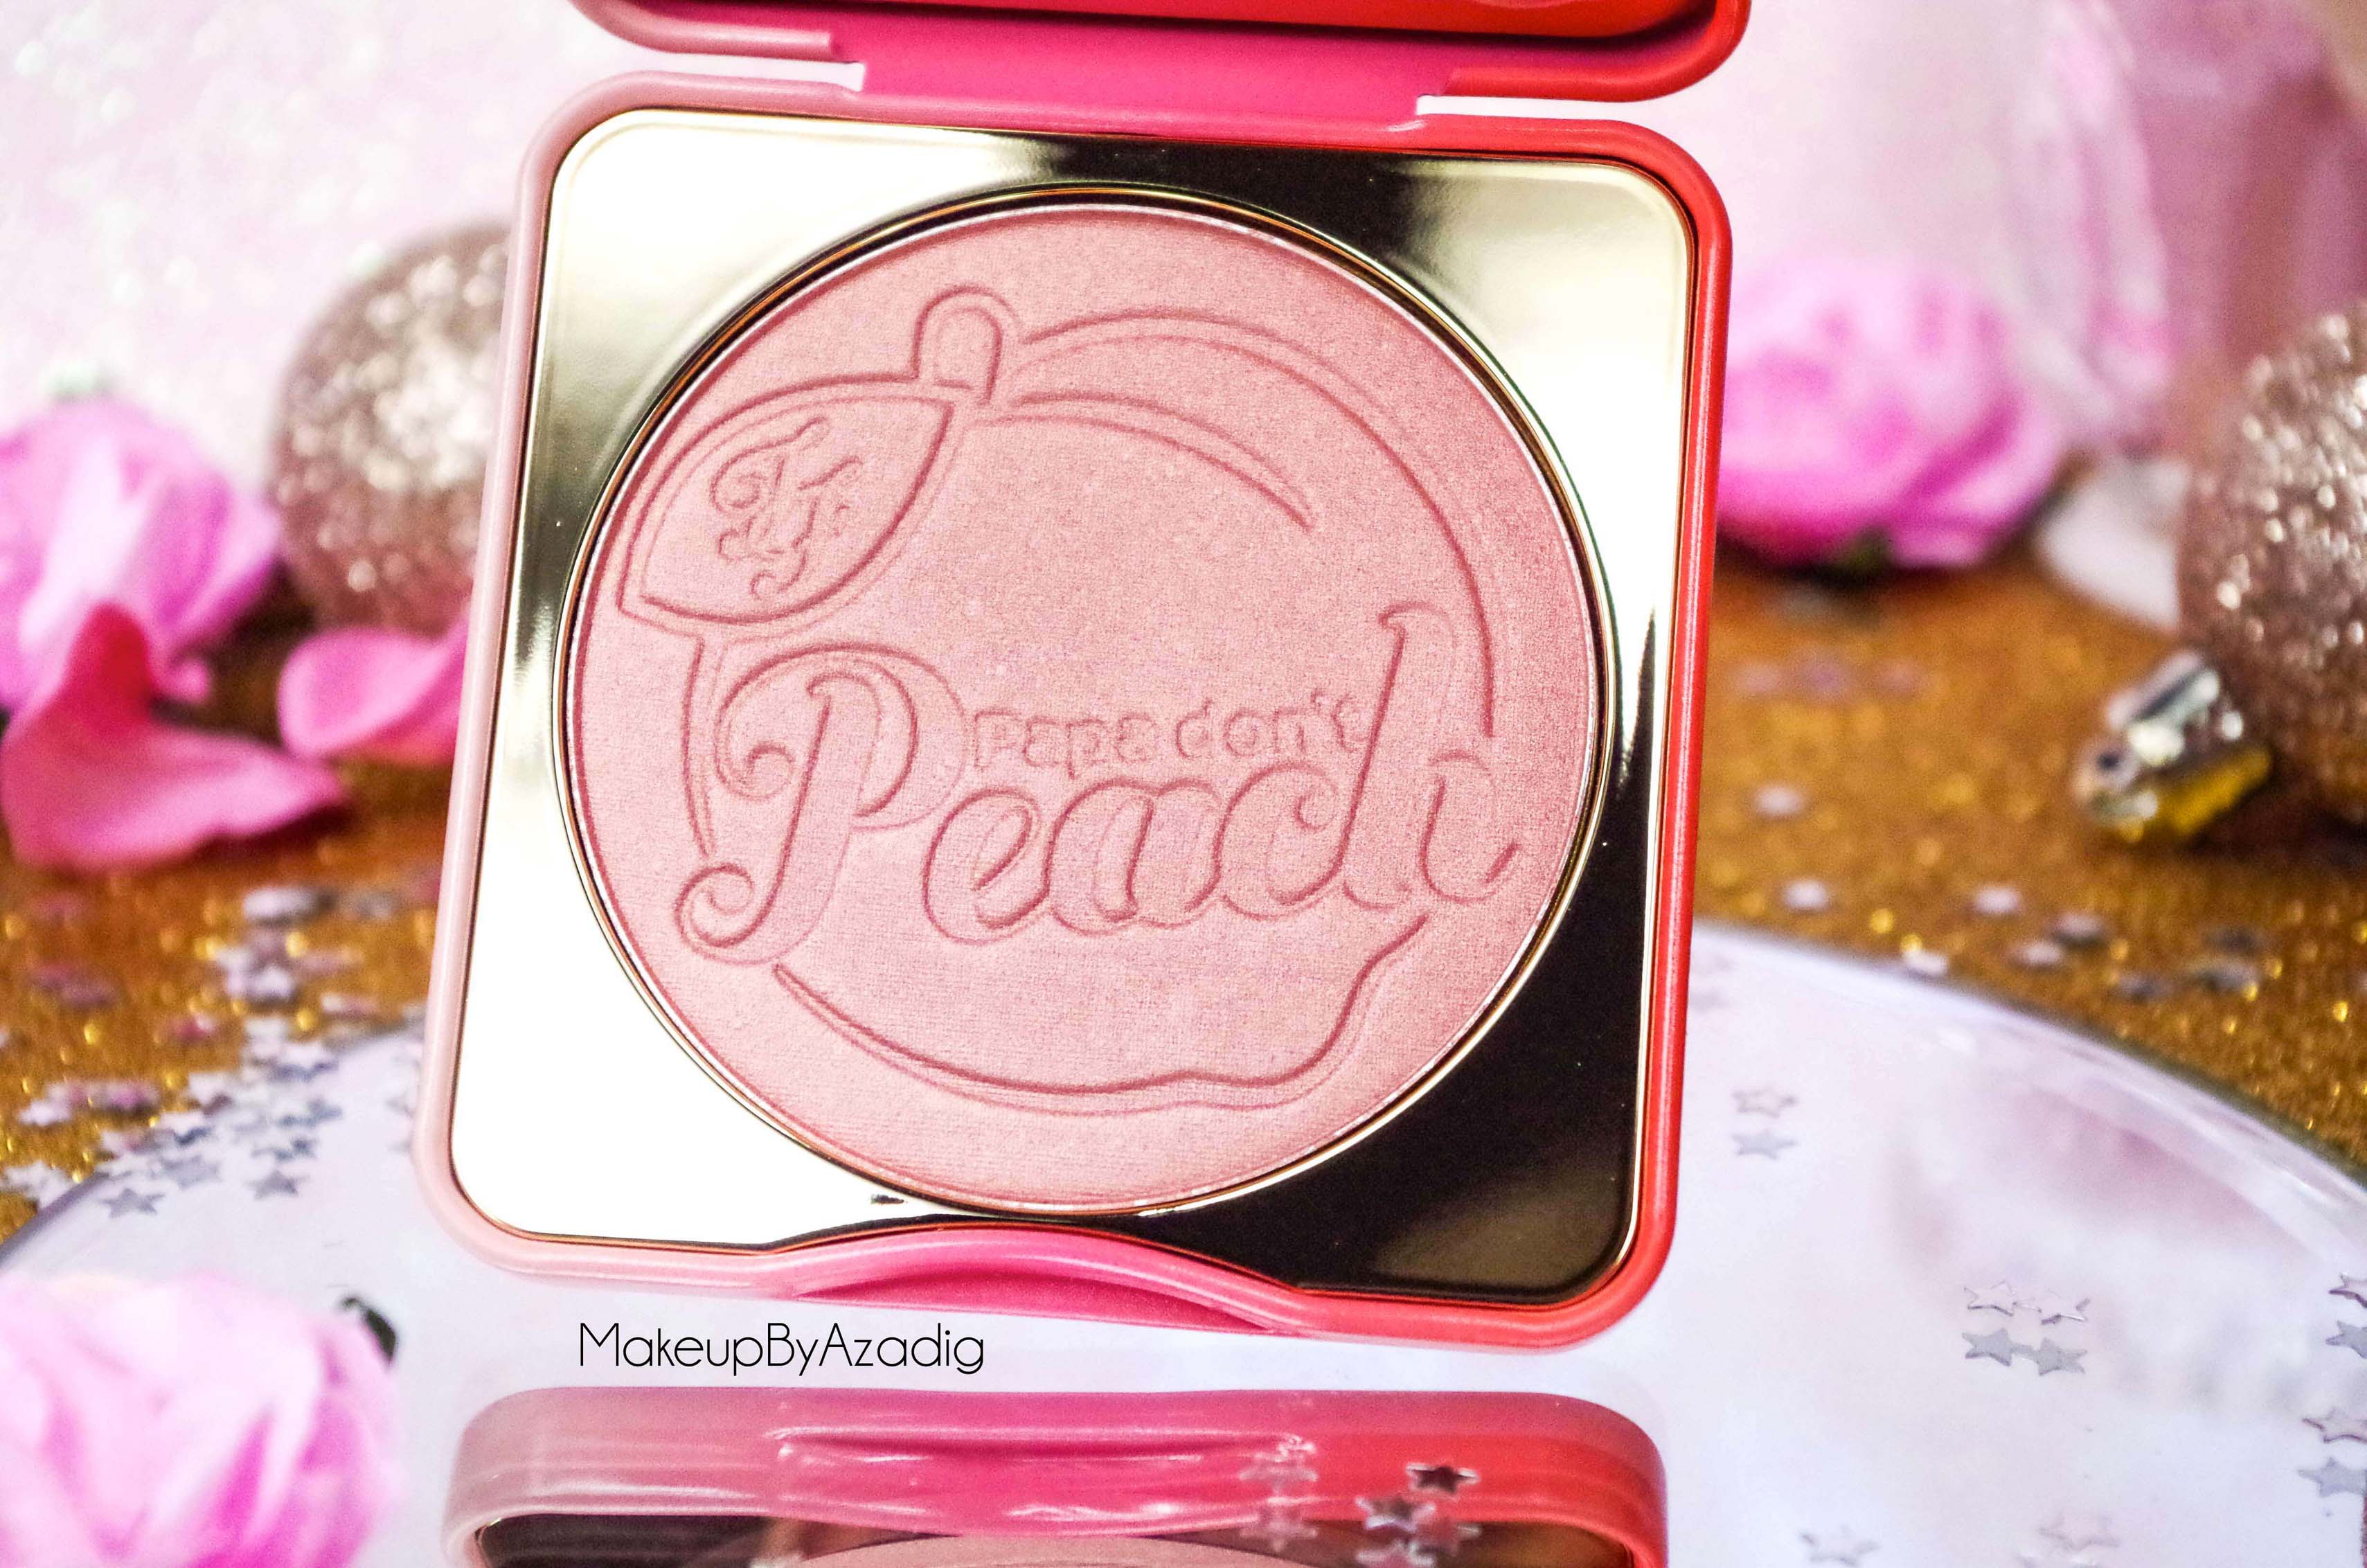 review-nouveau-blush-papa-dont-peach-too-faced-sephora-ete-printemps-paris-sweet-peach-swatch-avis-makeupbyazadig-jerome-2